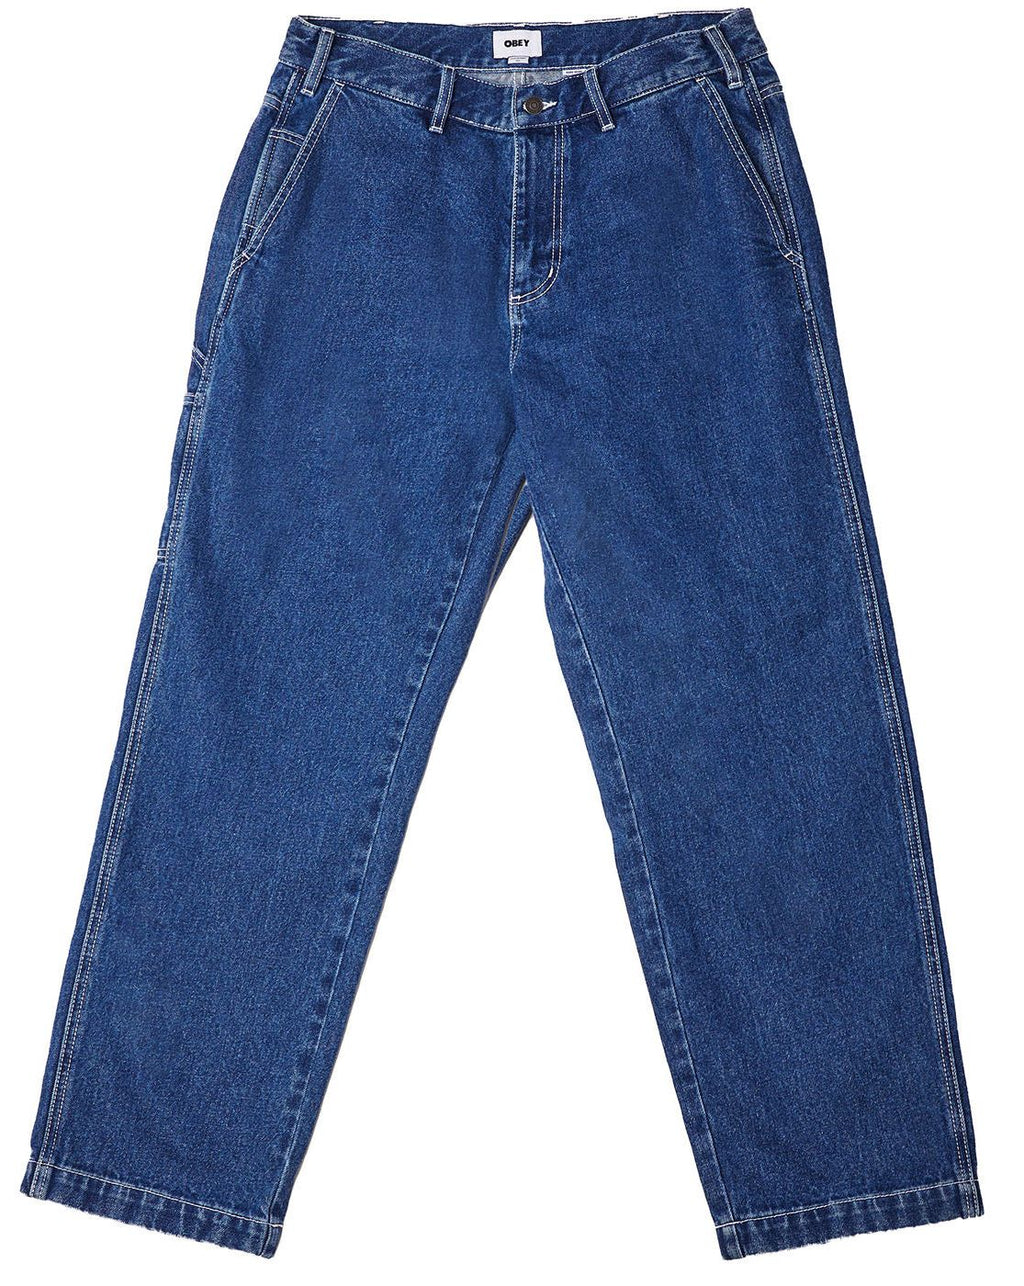  Obey Jeans Hardwork Carpenter Denim Pant Stonewash Indigo Blue Uomo - 2